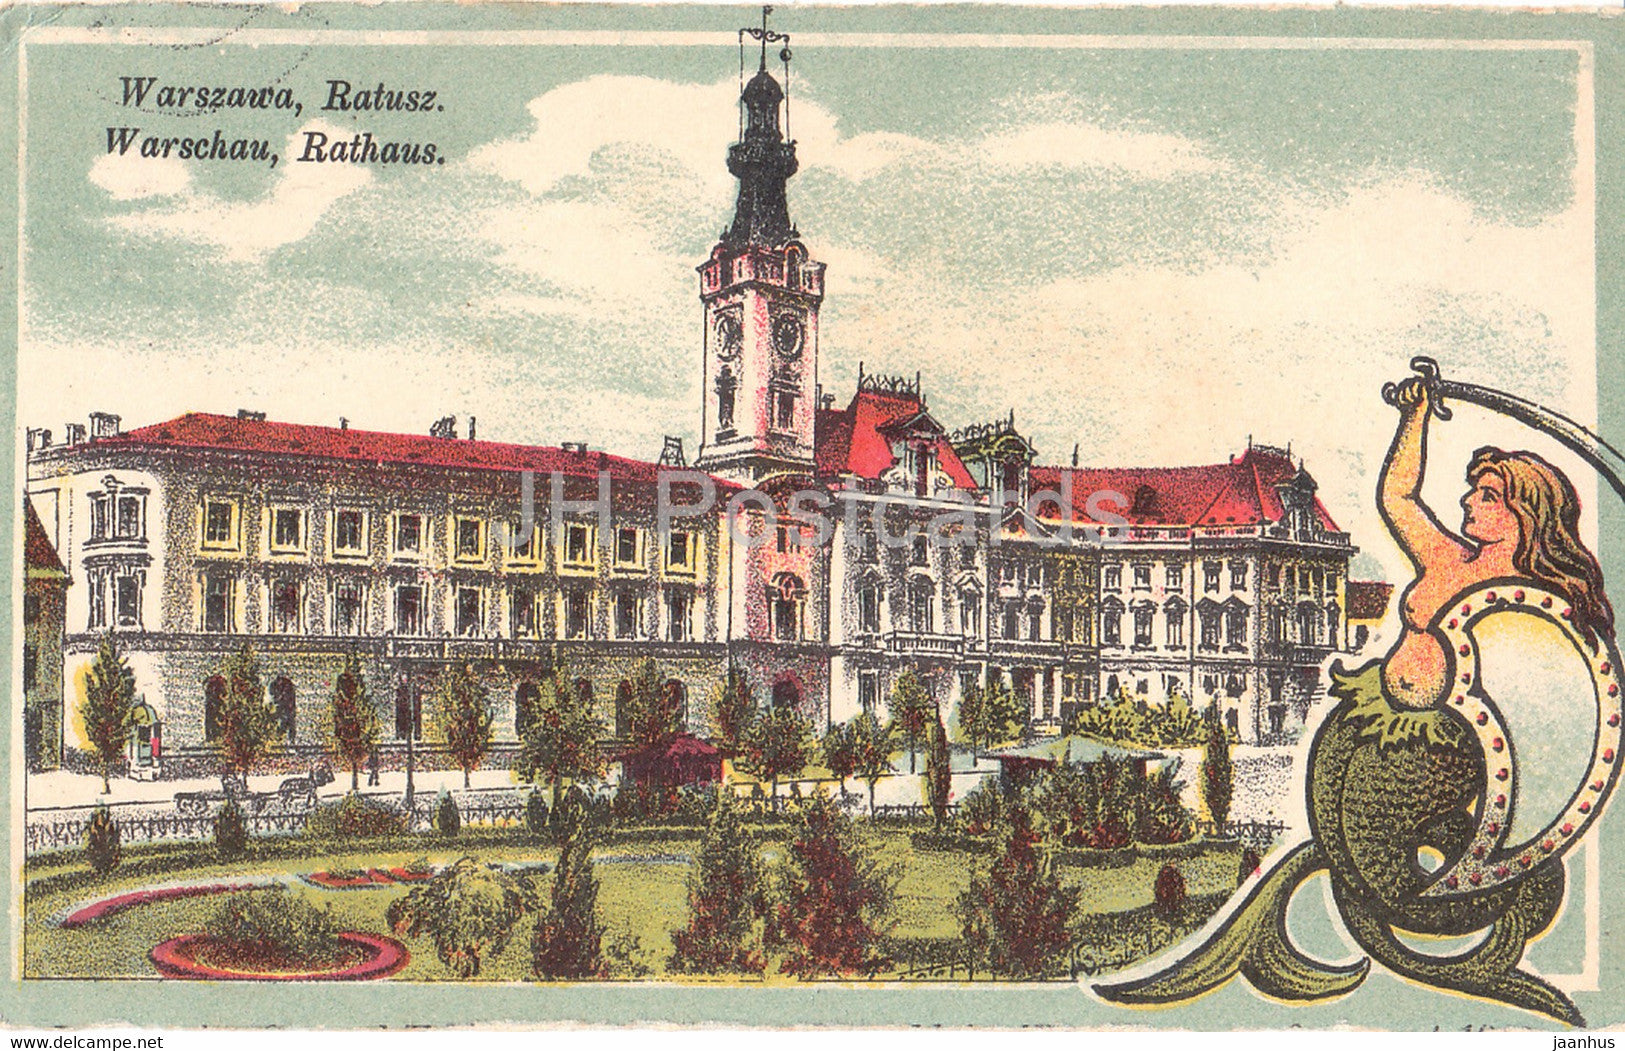 Warszawa - Ratusz - Warschau Rathaus - Feldpost - old postcard - 1917 - Poland - used - JH Postcards